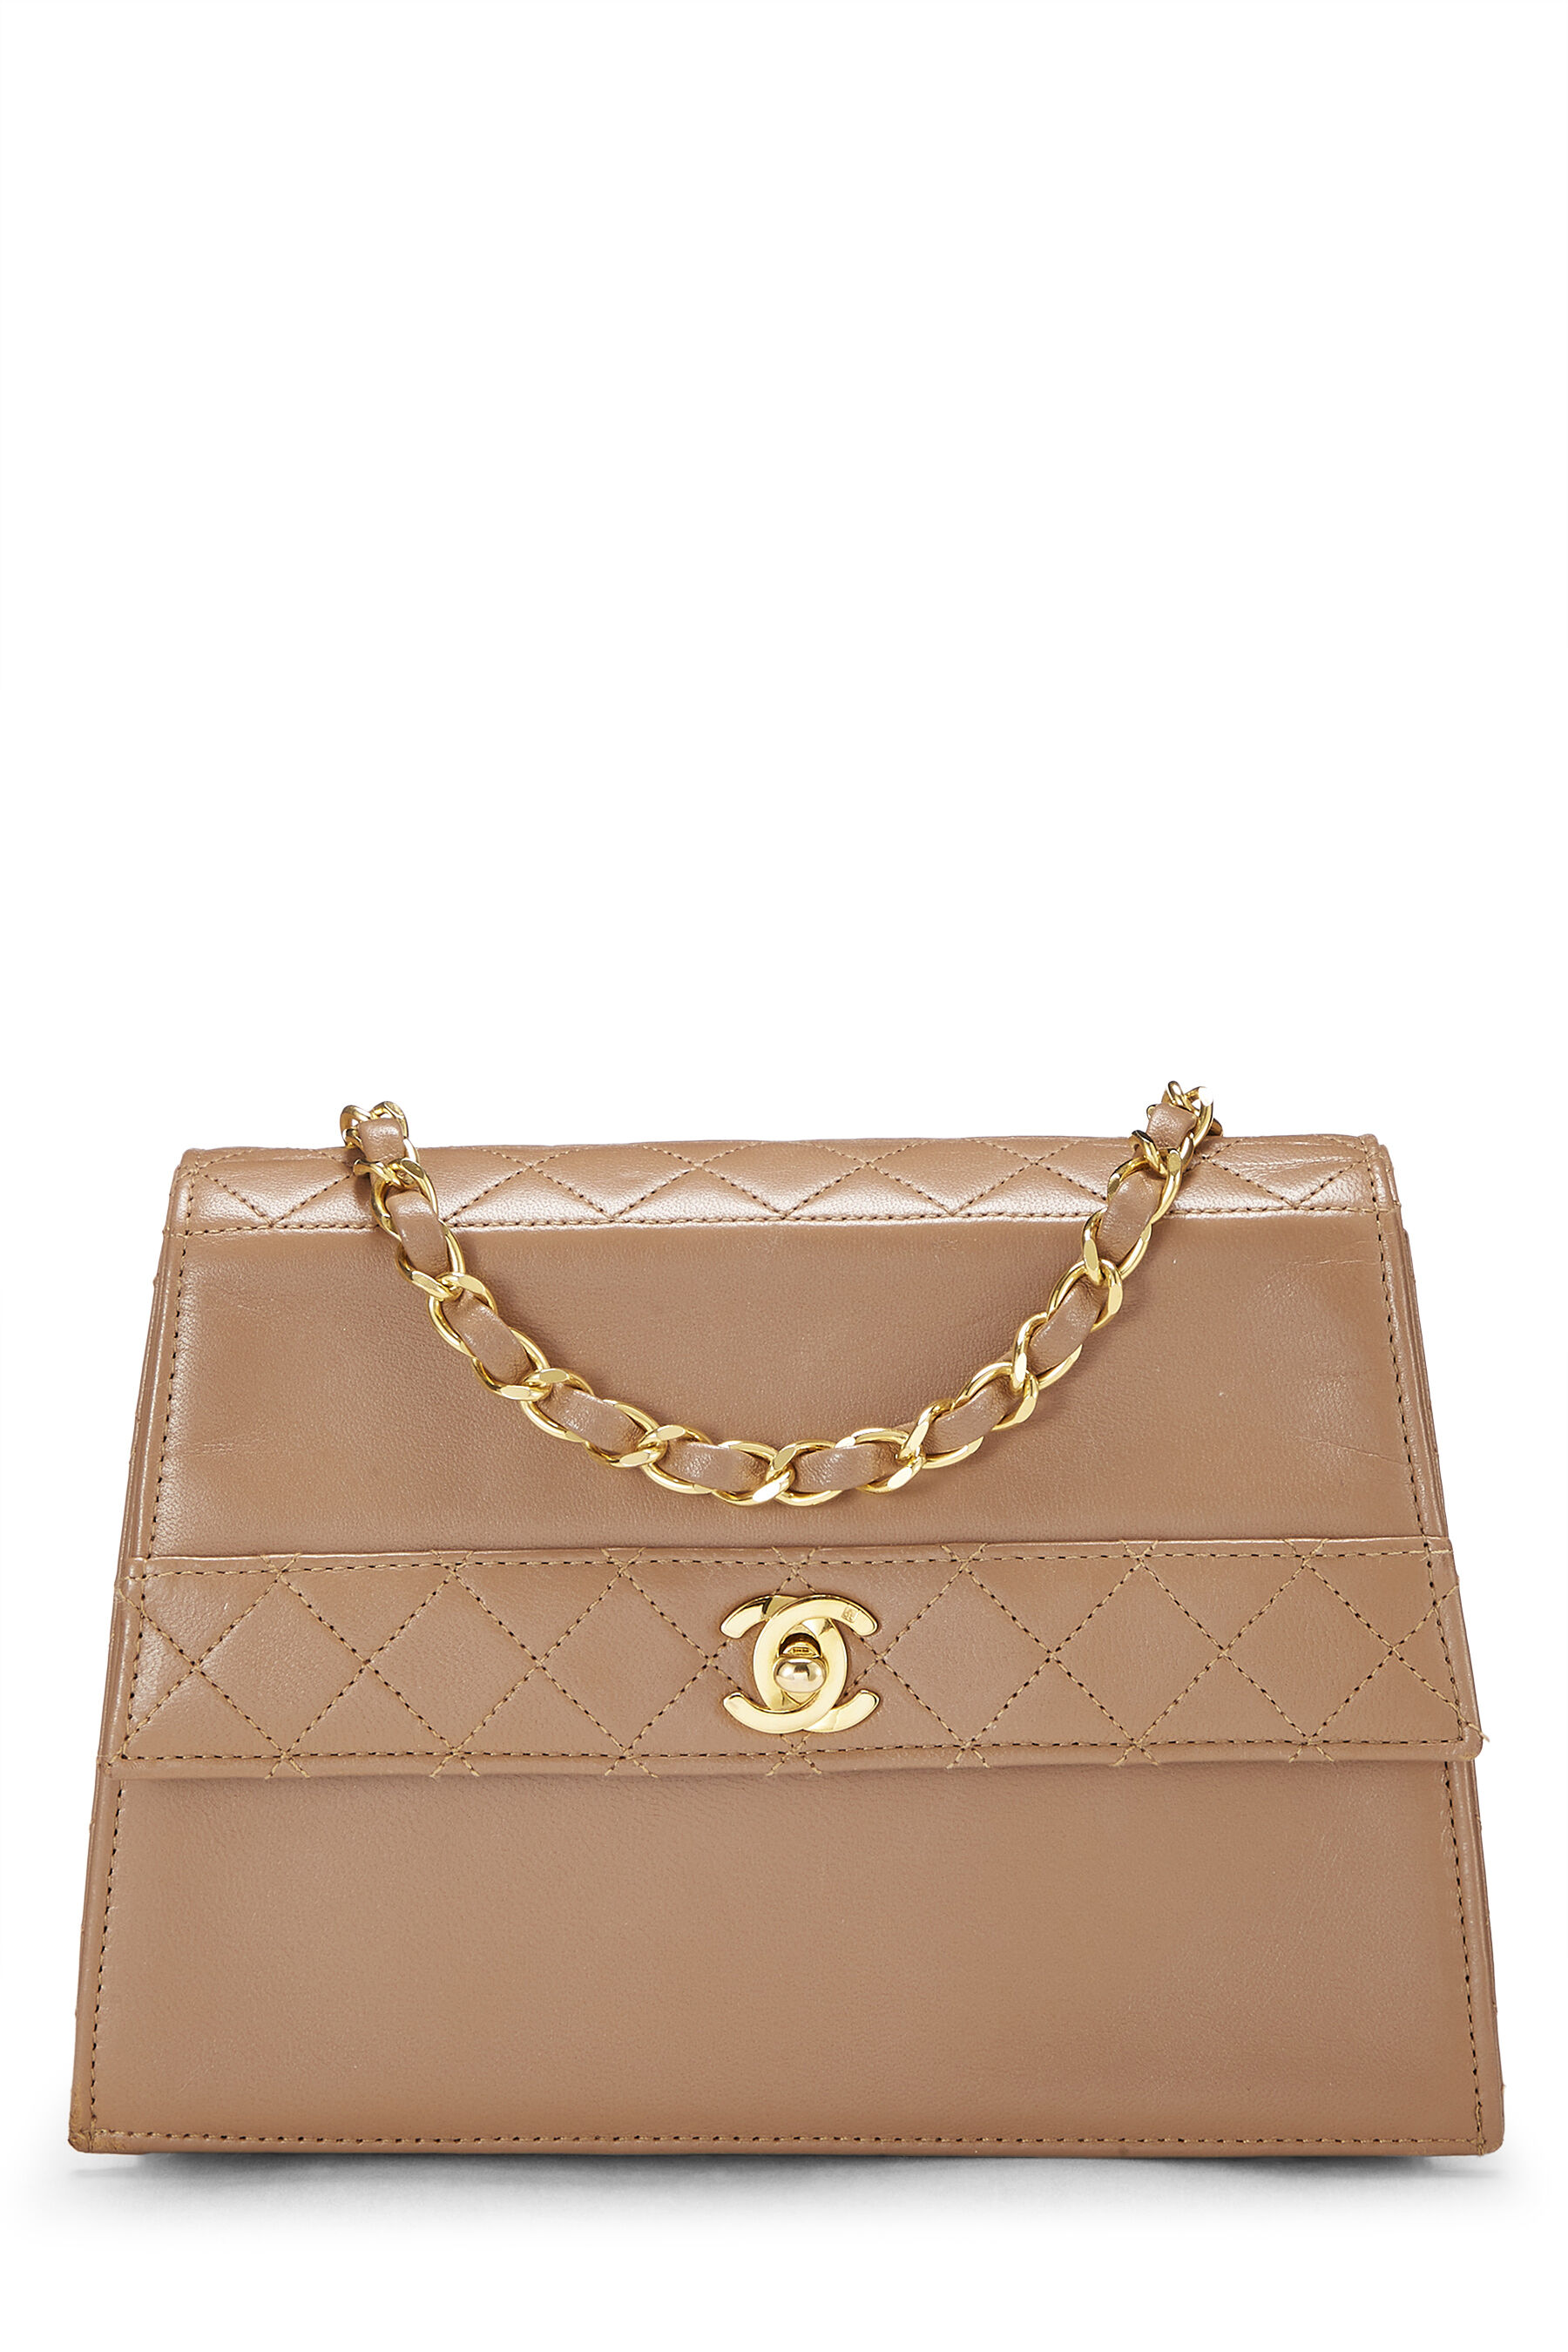 Chanel - Brown Lambskin Trapezoid Flap Bag